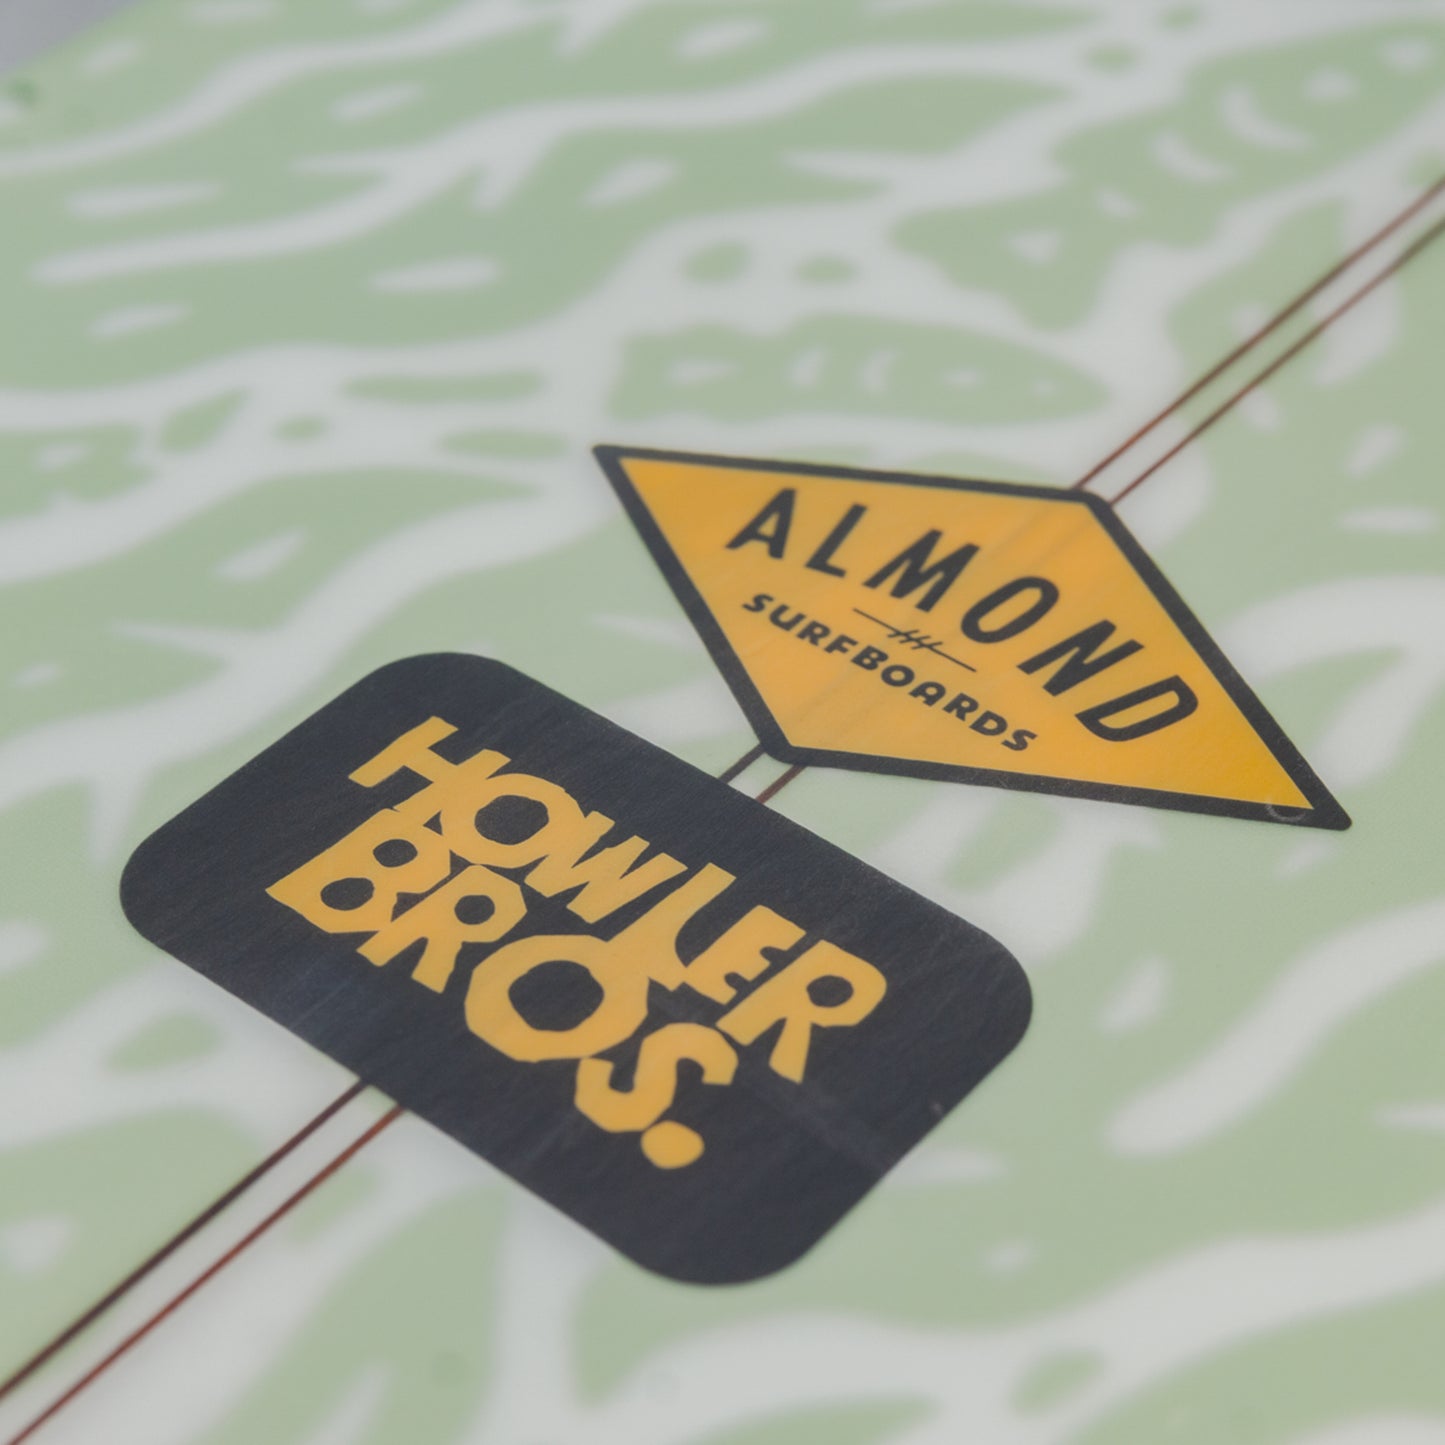 Howler x Almond 6'6" Surfboard - Kelp Forest